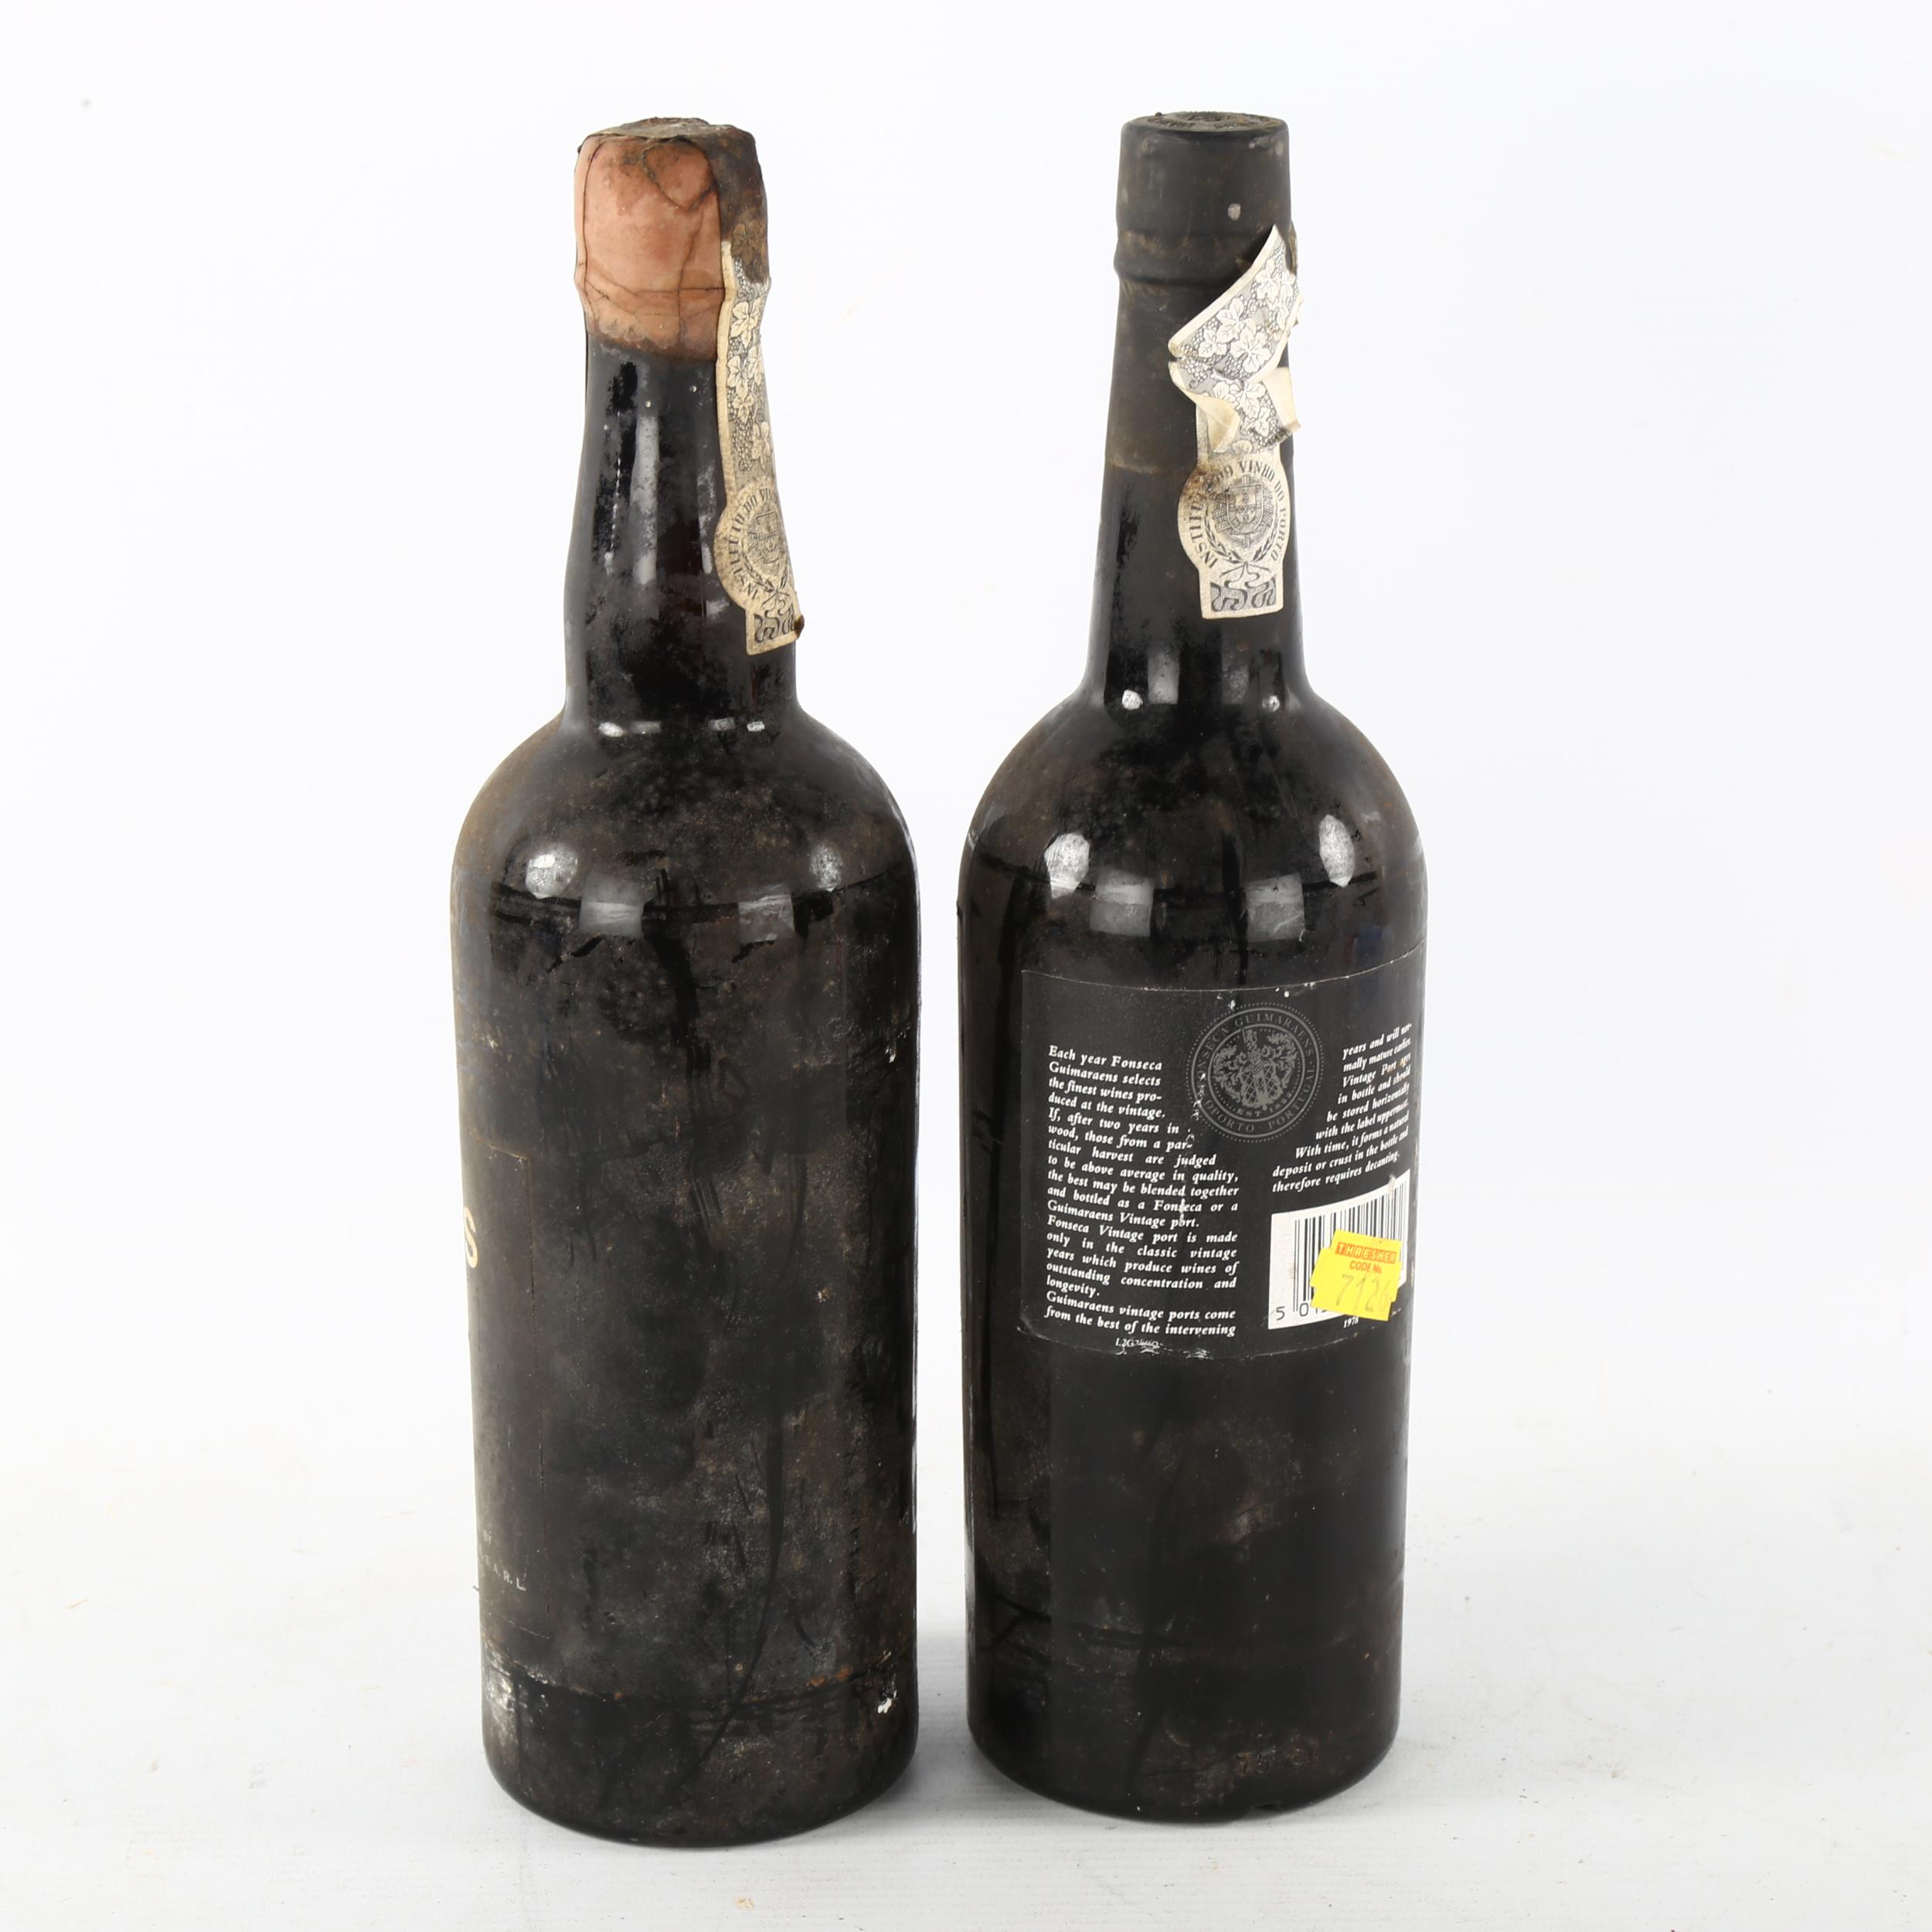 2 bottles of vintage port, Fonseca 1960, Fonseca Guimaraens 1978 levels to low neck 1960 - capsule - Image 3 of 3